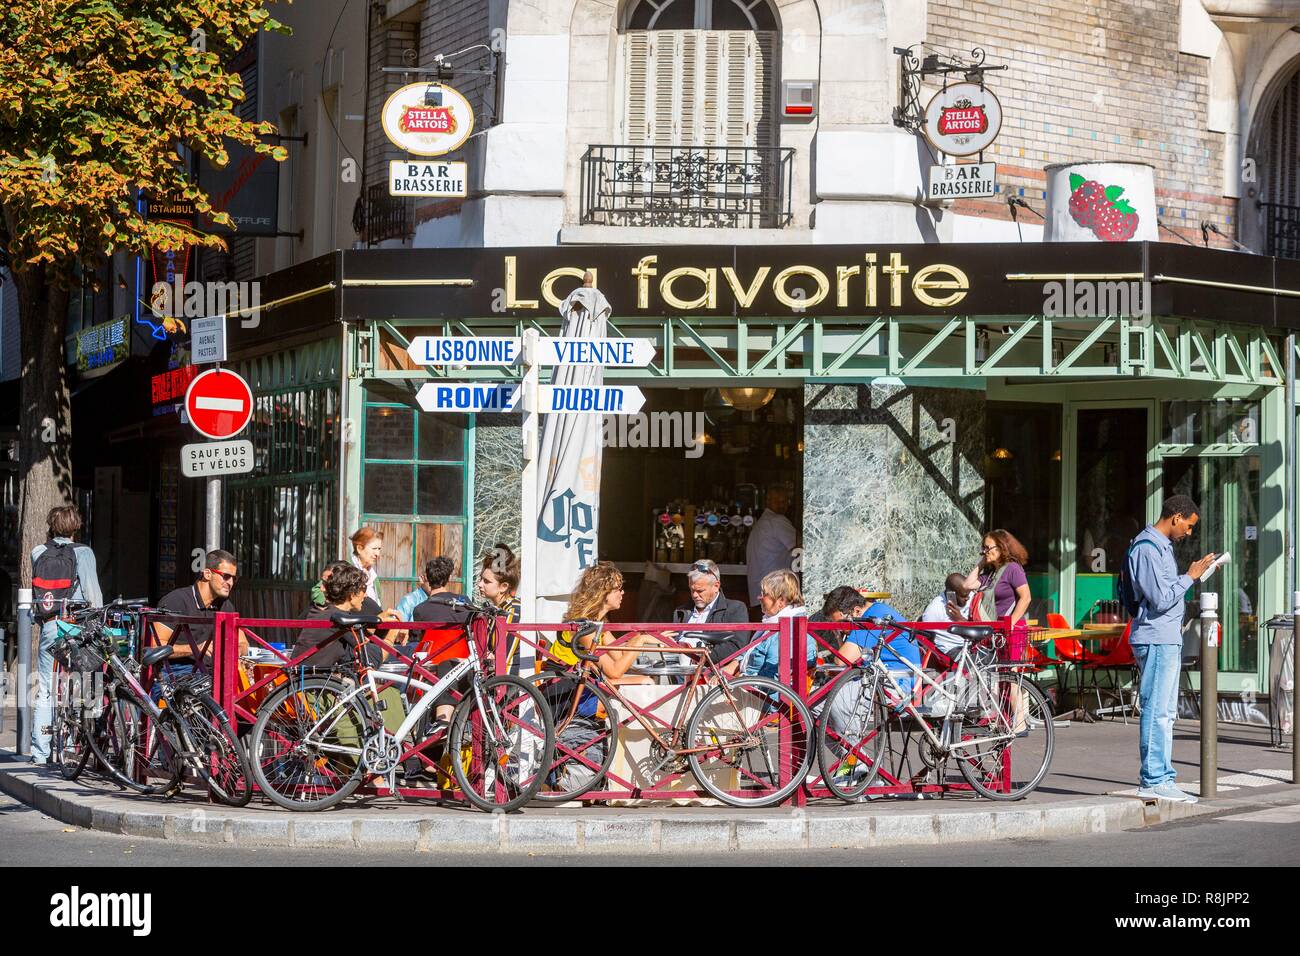 France, Seine Saint Denis, Montreuil, the Favorite bar Stock Photo - Alamy